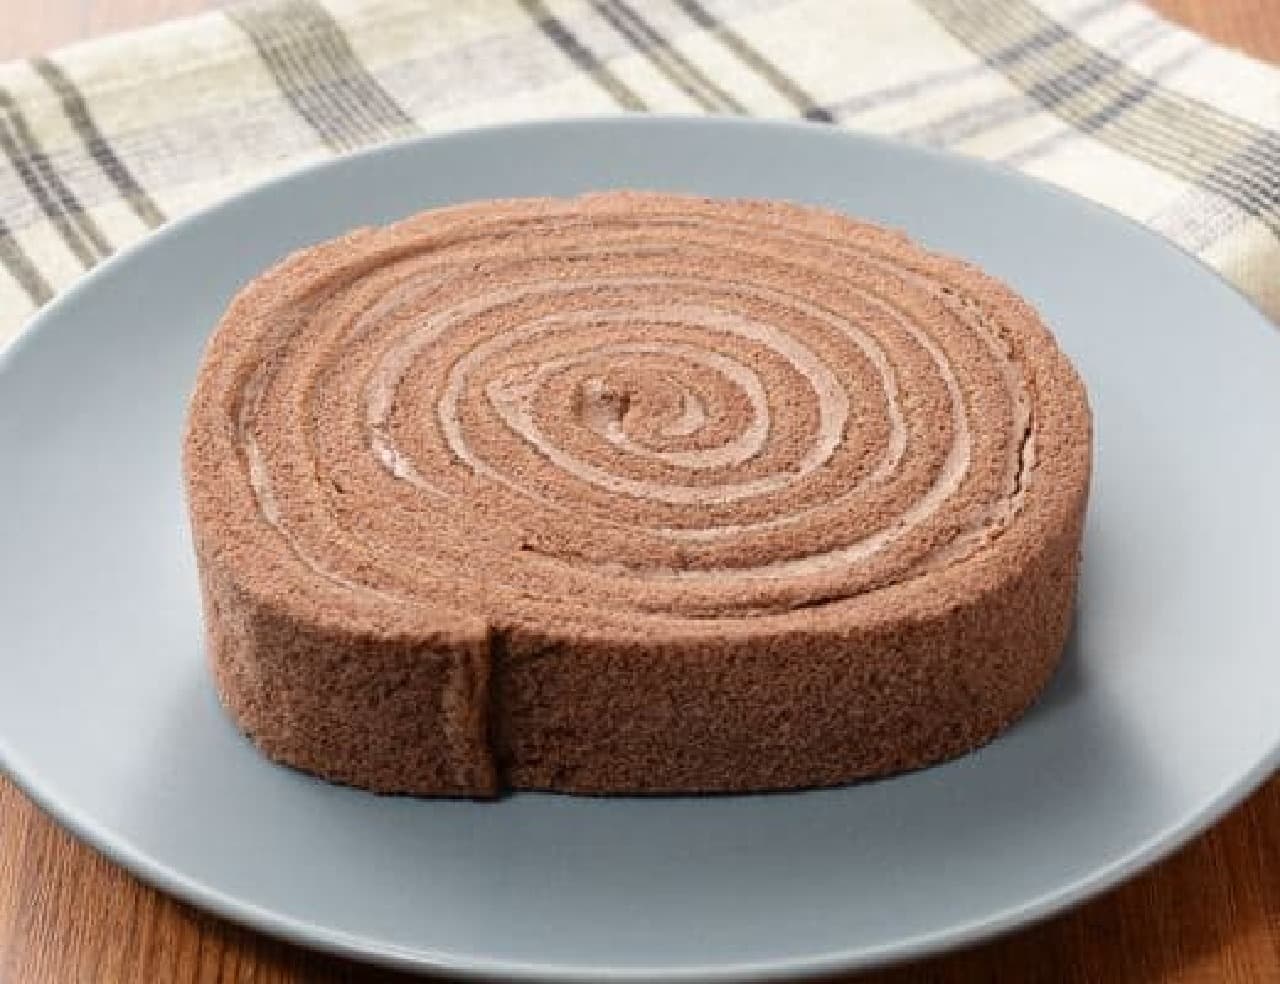 Lawson "Uzumaki Chocolate Roll Cake